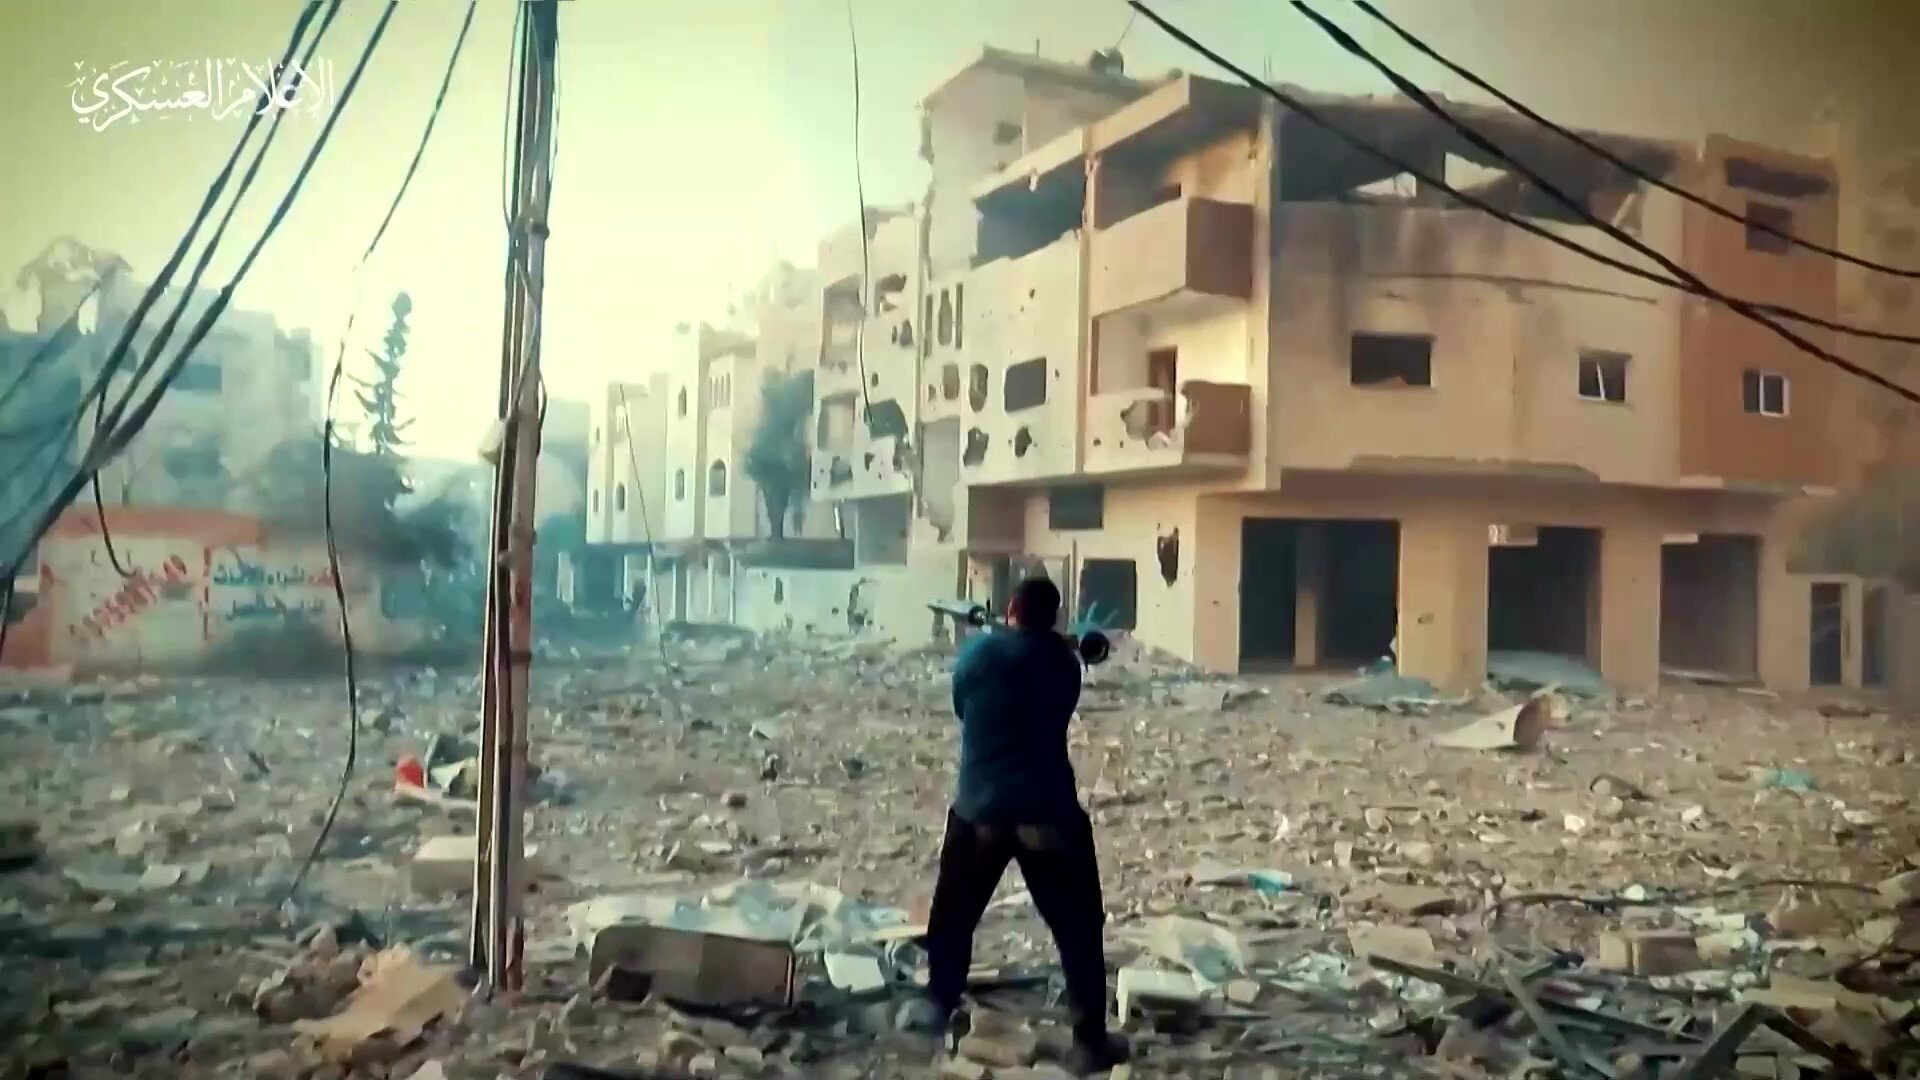 Man using rocket launcher on his shoulder amongst rubble